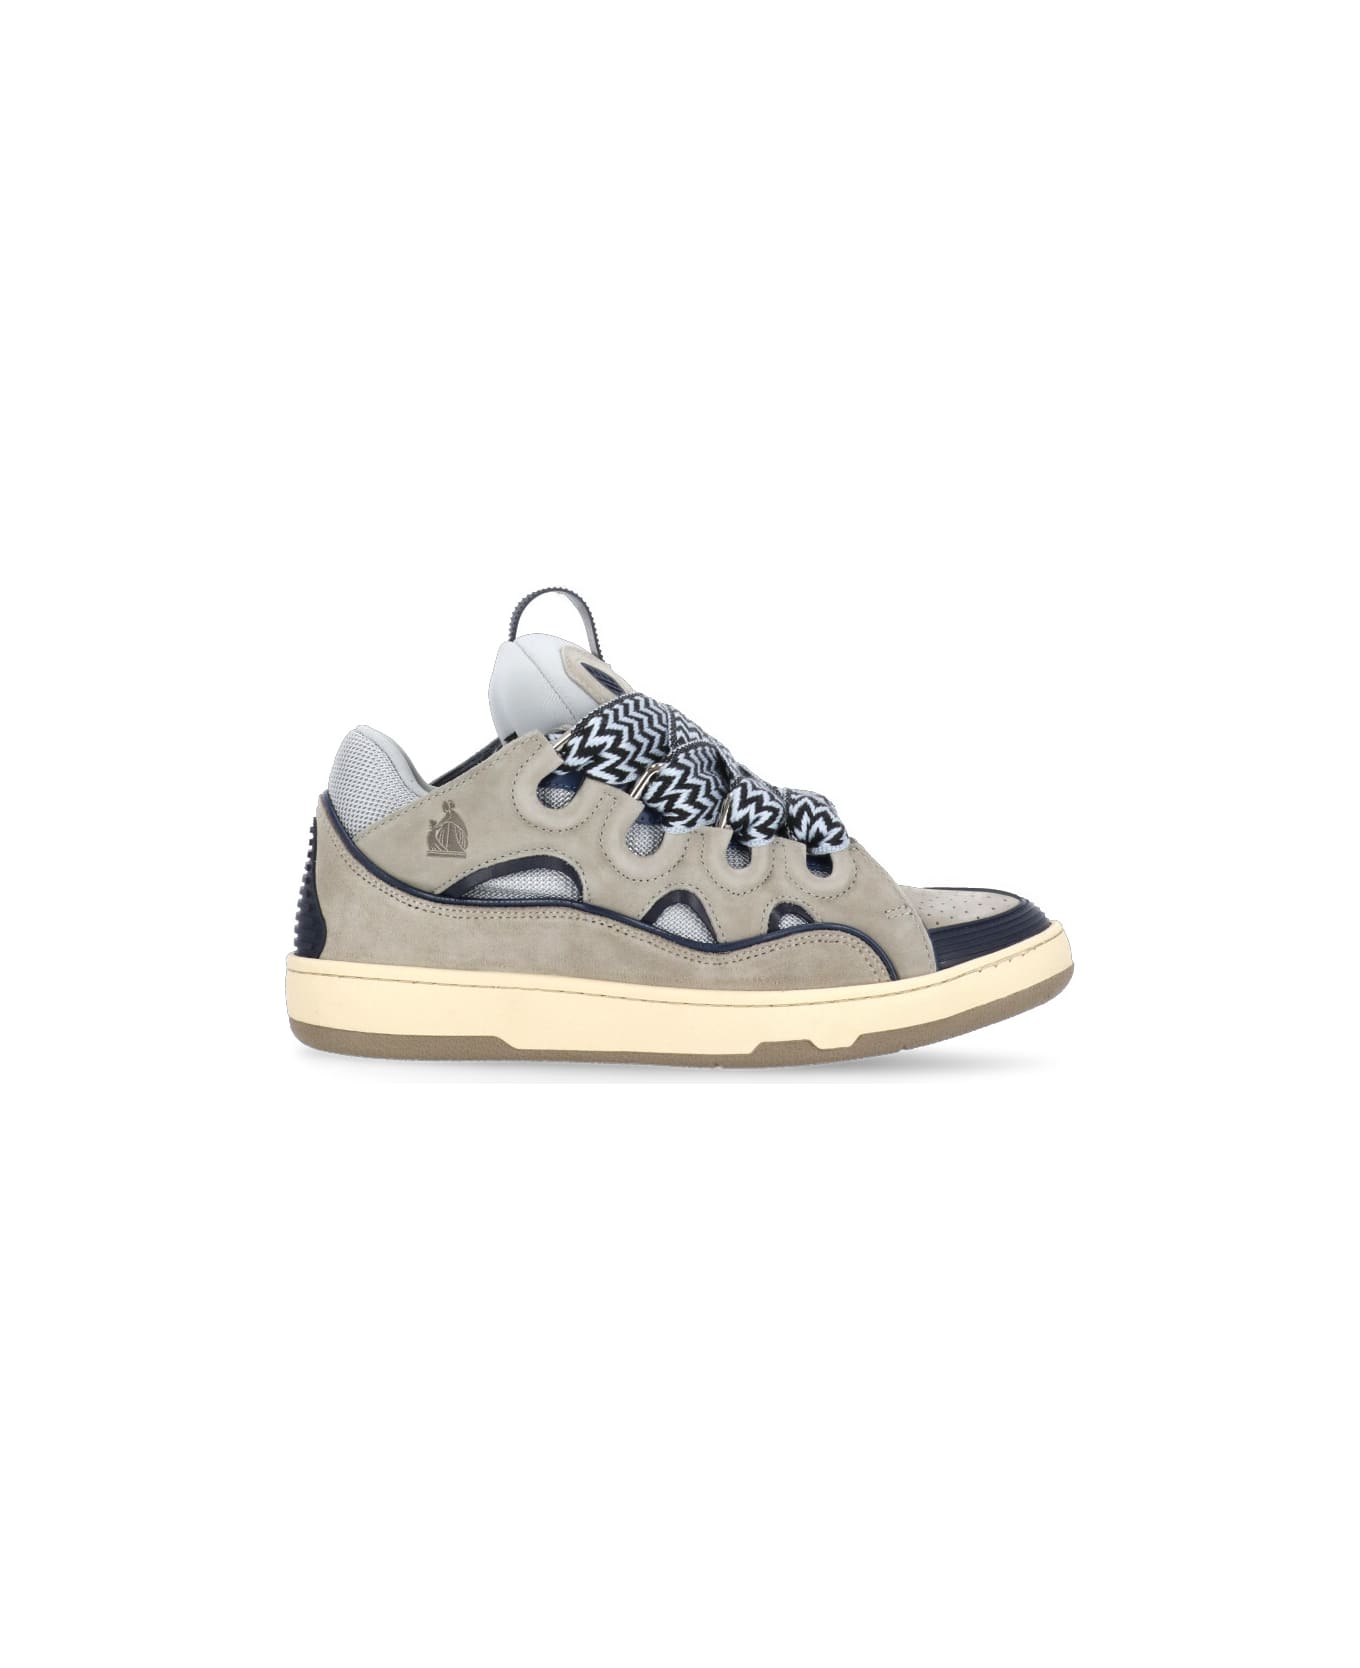 Lanvin Curb Sneakers - Grey